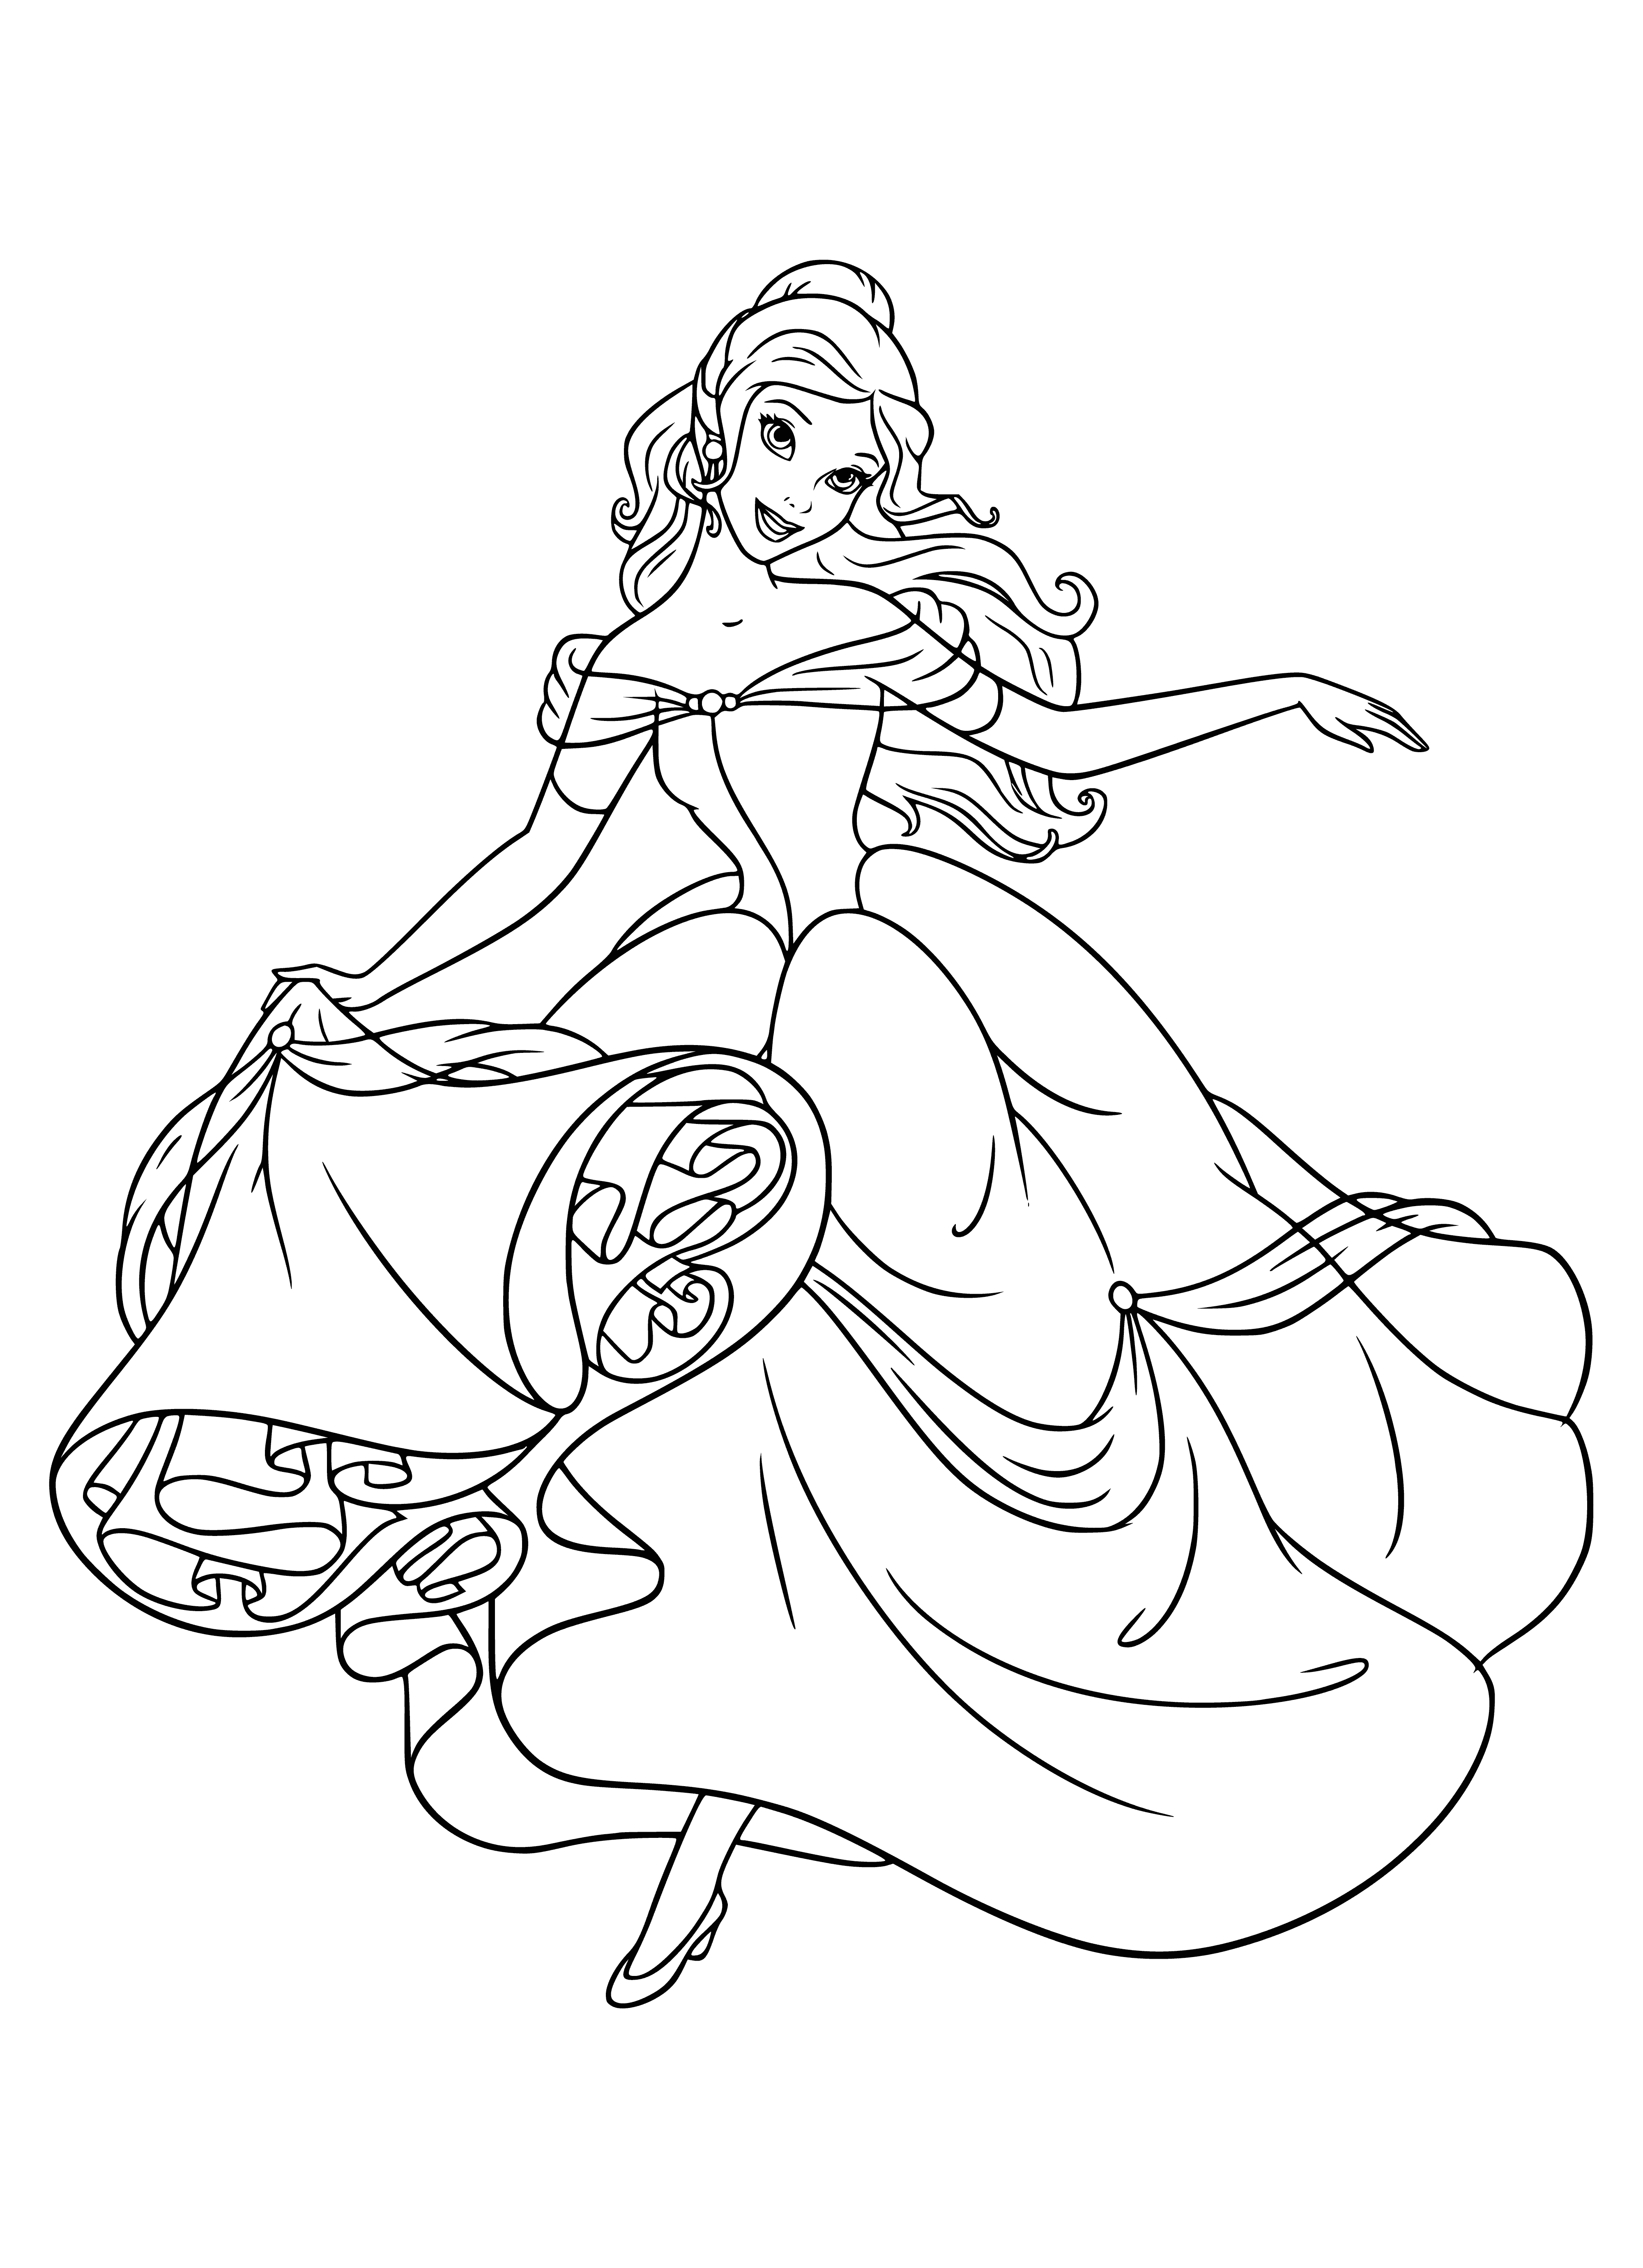 Disney Princess Belle coloring page